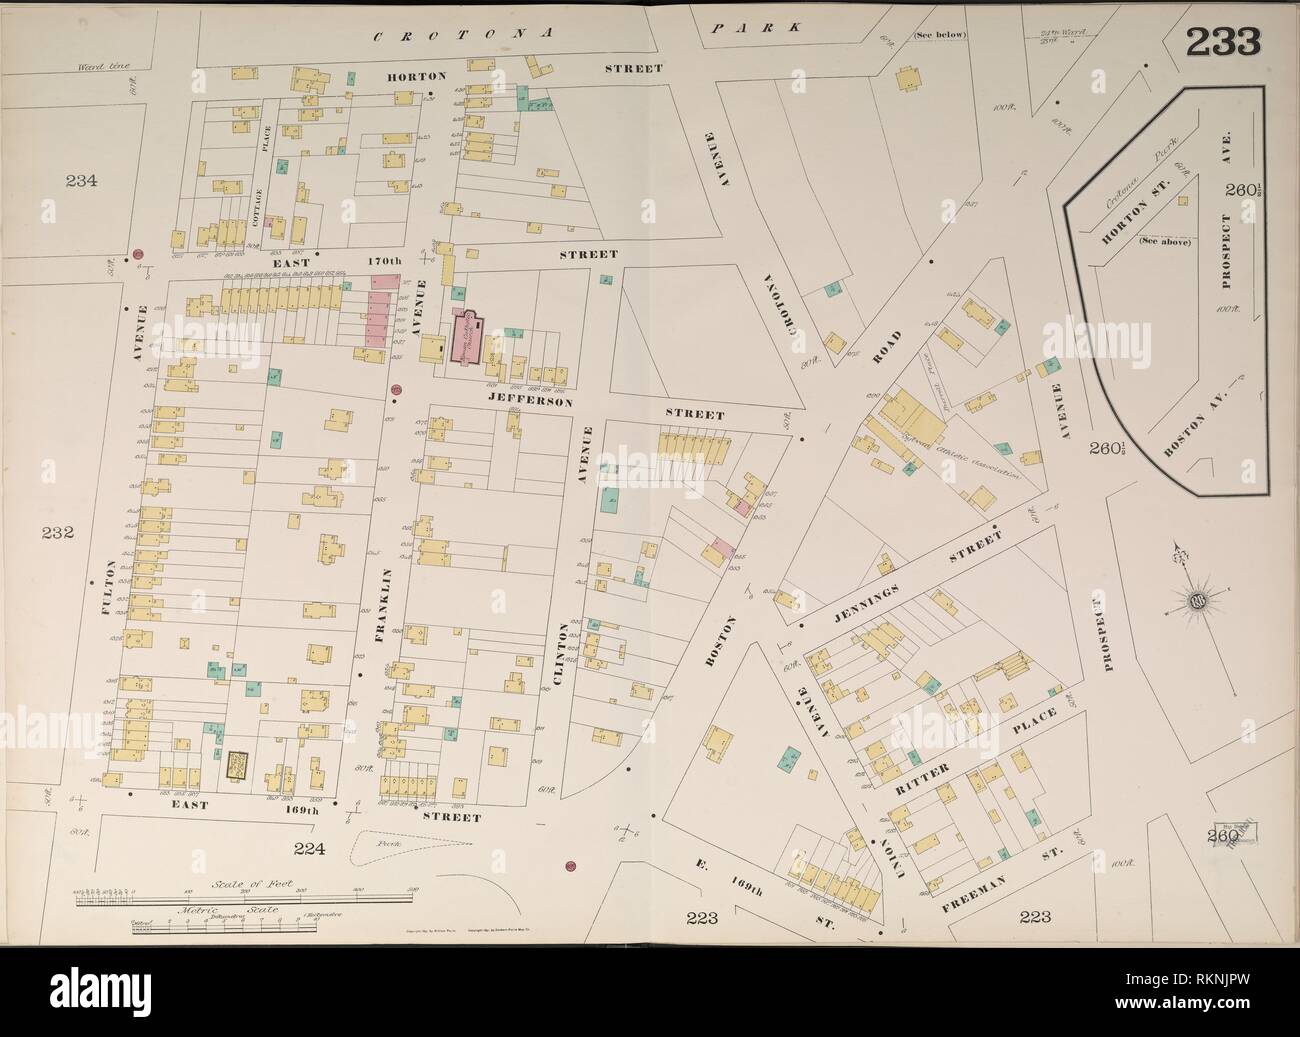 Bronx, V. 10, Nº 233, placa de doble página [mapa delimitado por Horton St., Prospect Ave., E. 169th St., Fulton Ave.]. Mapa Sanborn Company (editor). Foto de stock